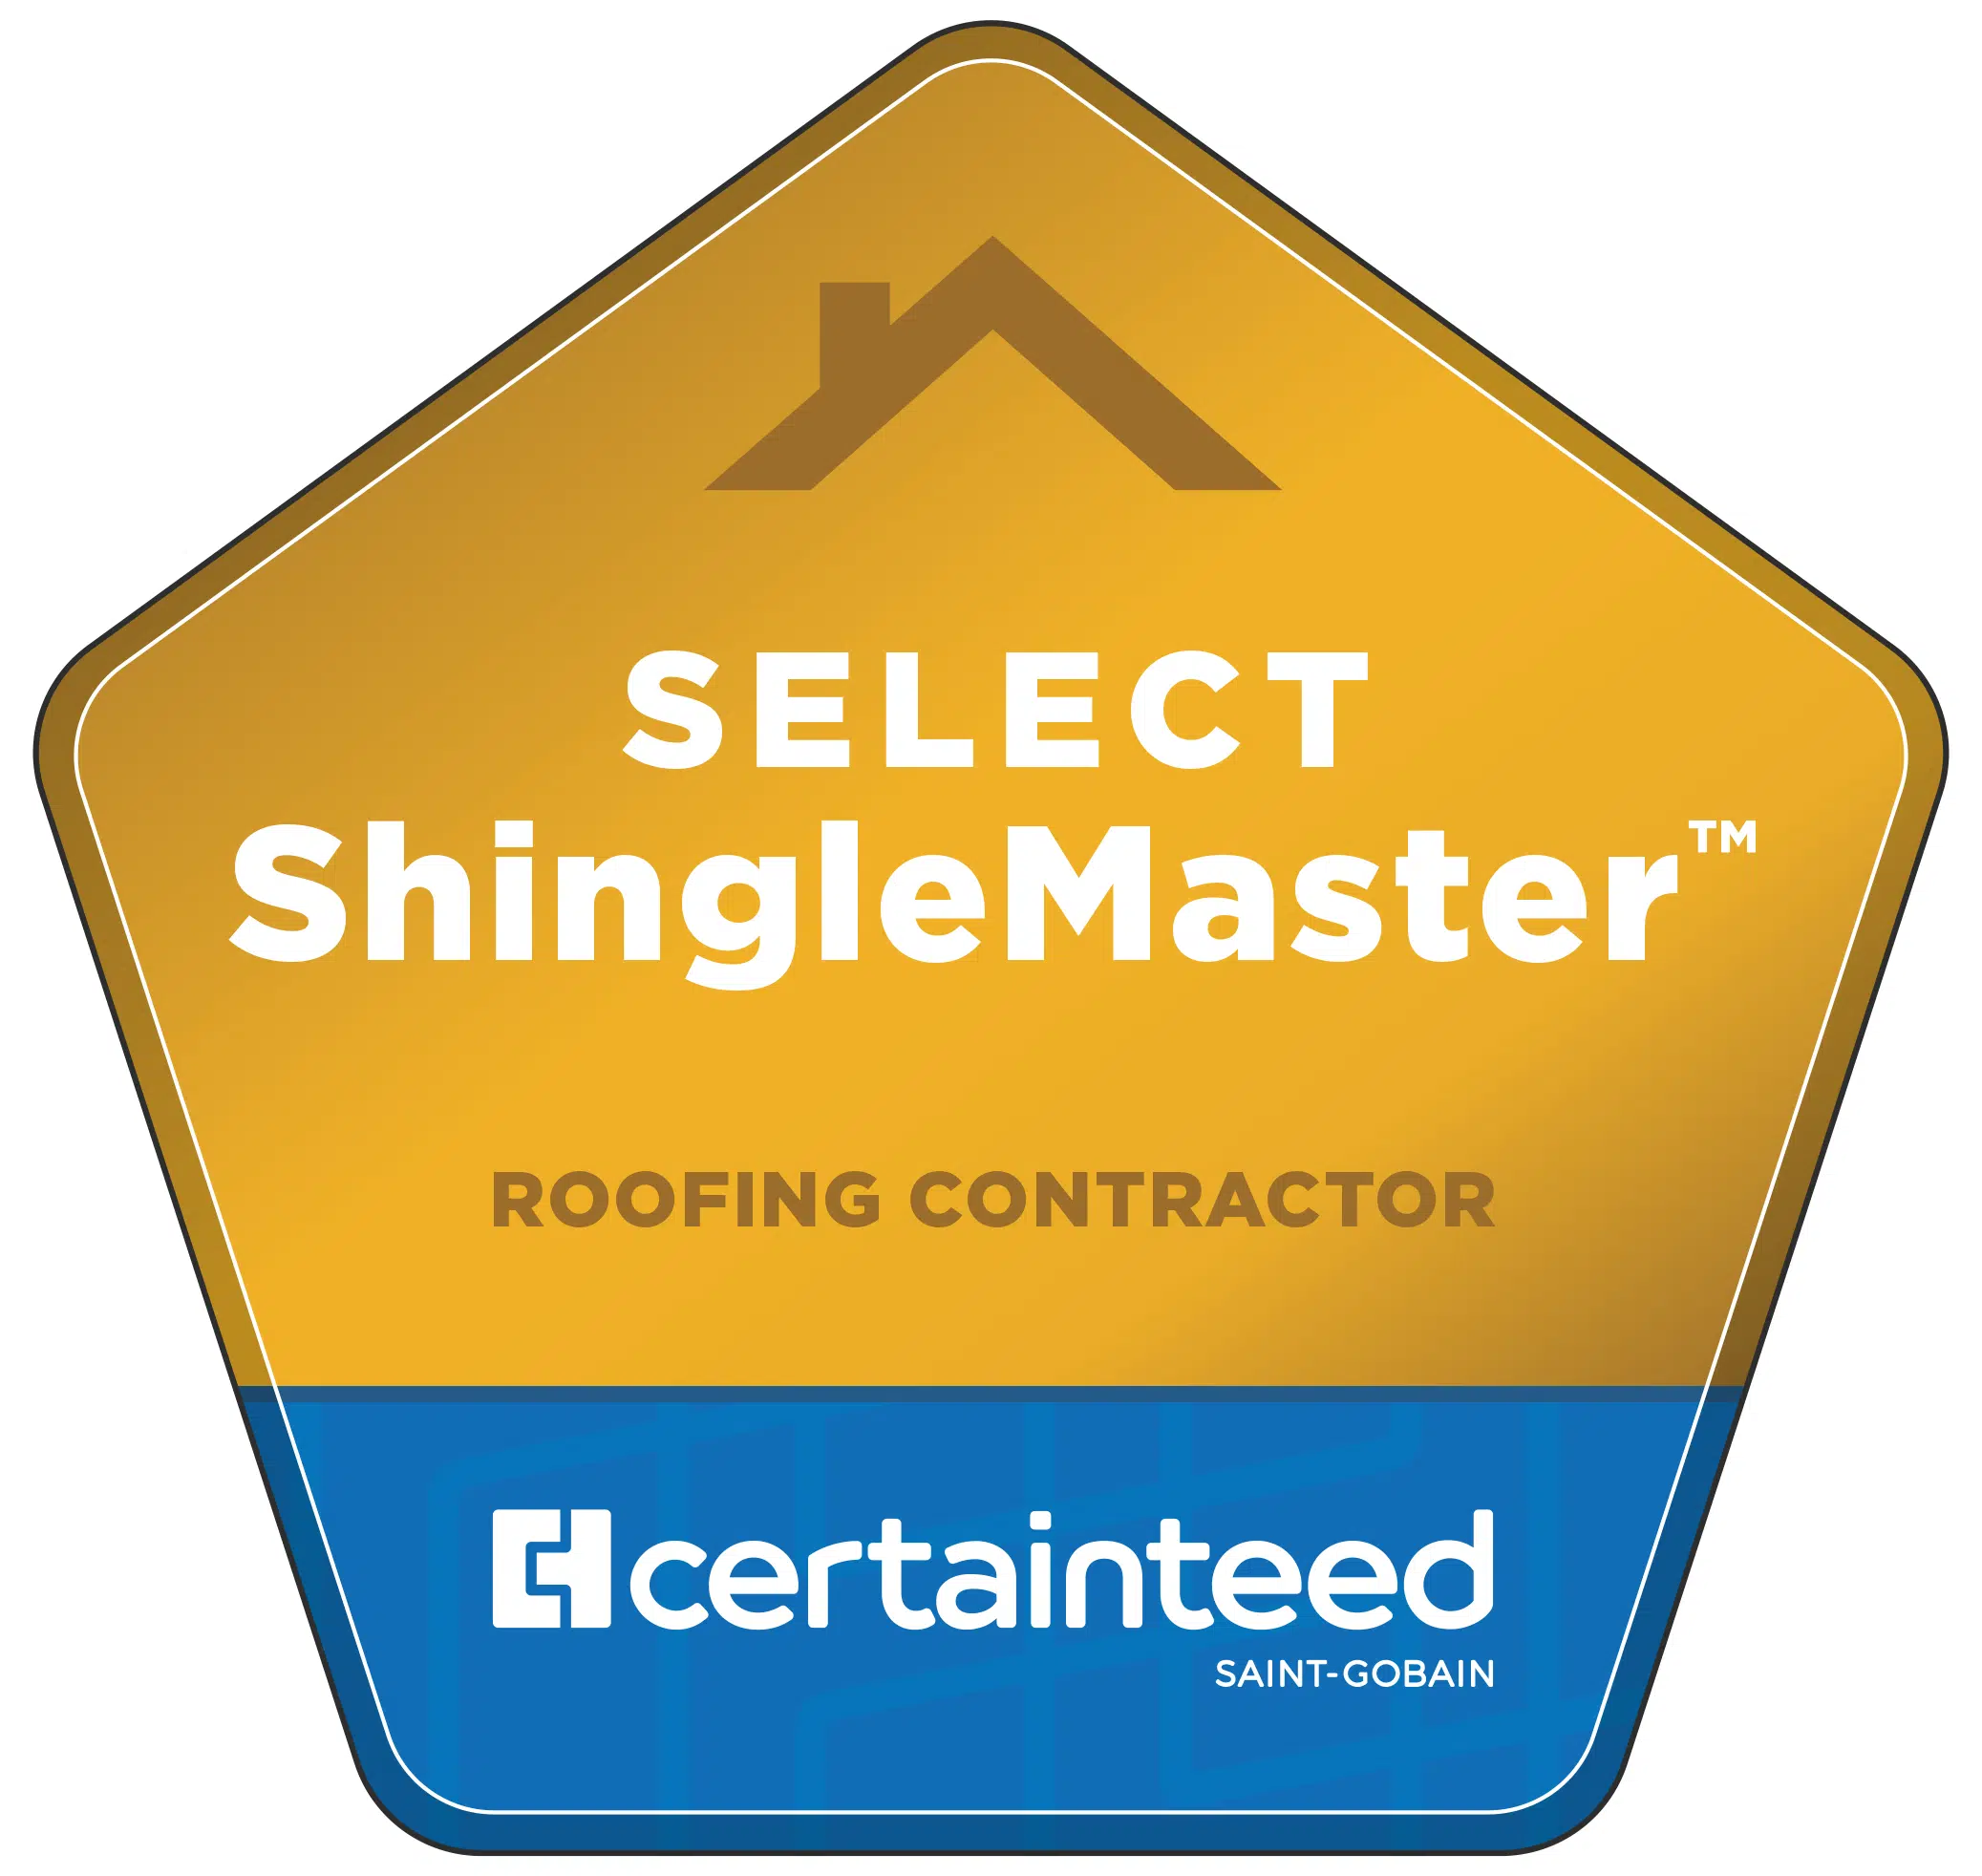 Select ShingleMaster Certified Badge